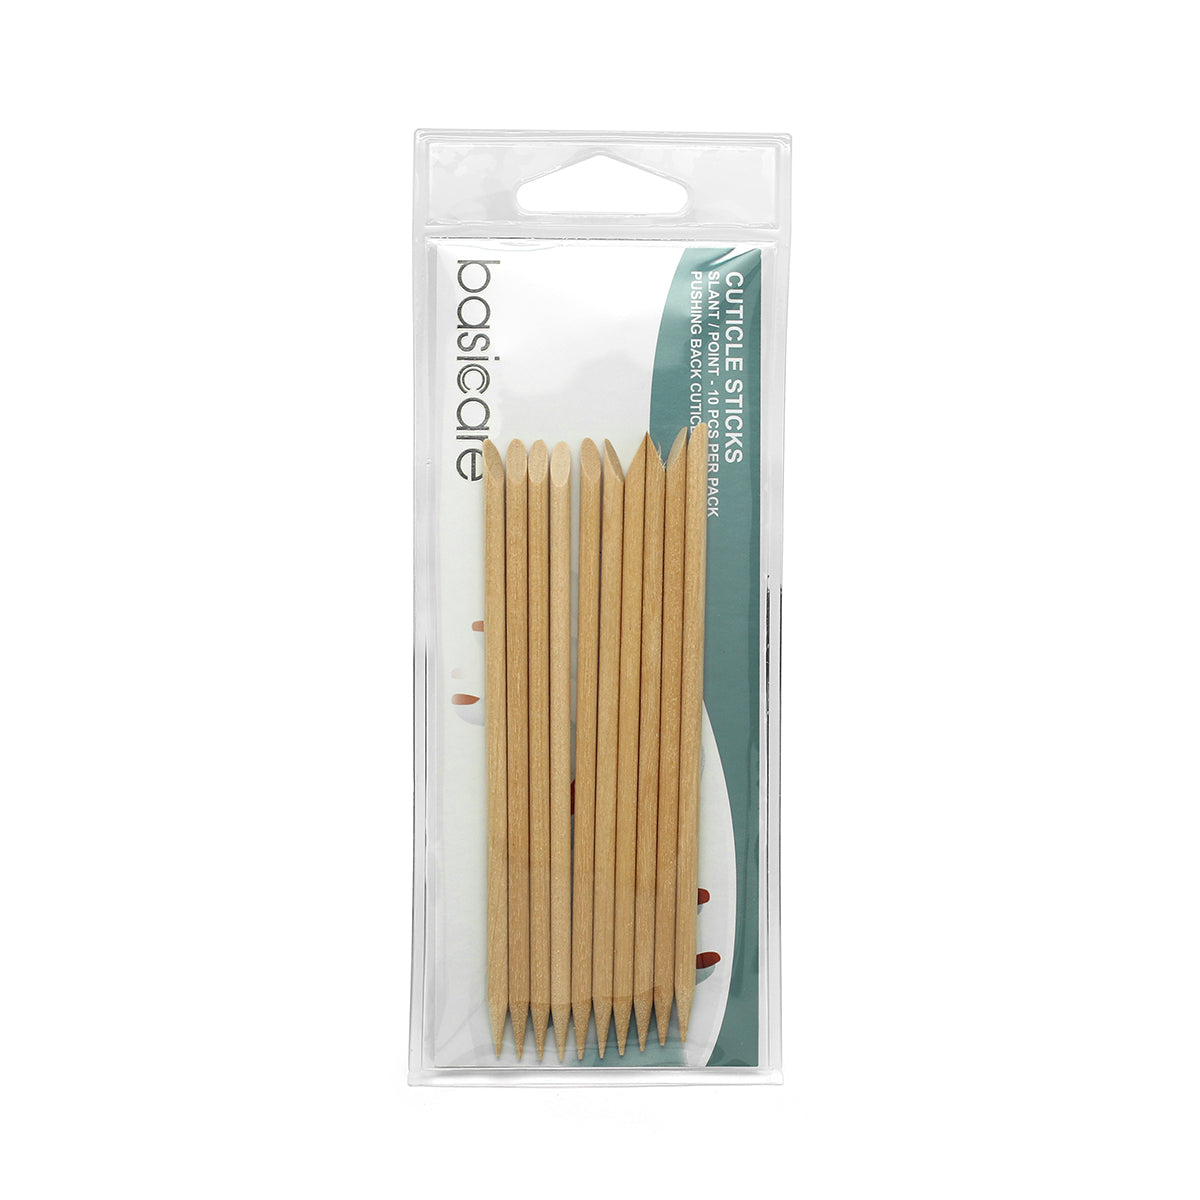 Basicare 10-in-Pack Cuticle Sticks (7616124485856)